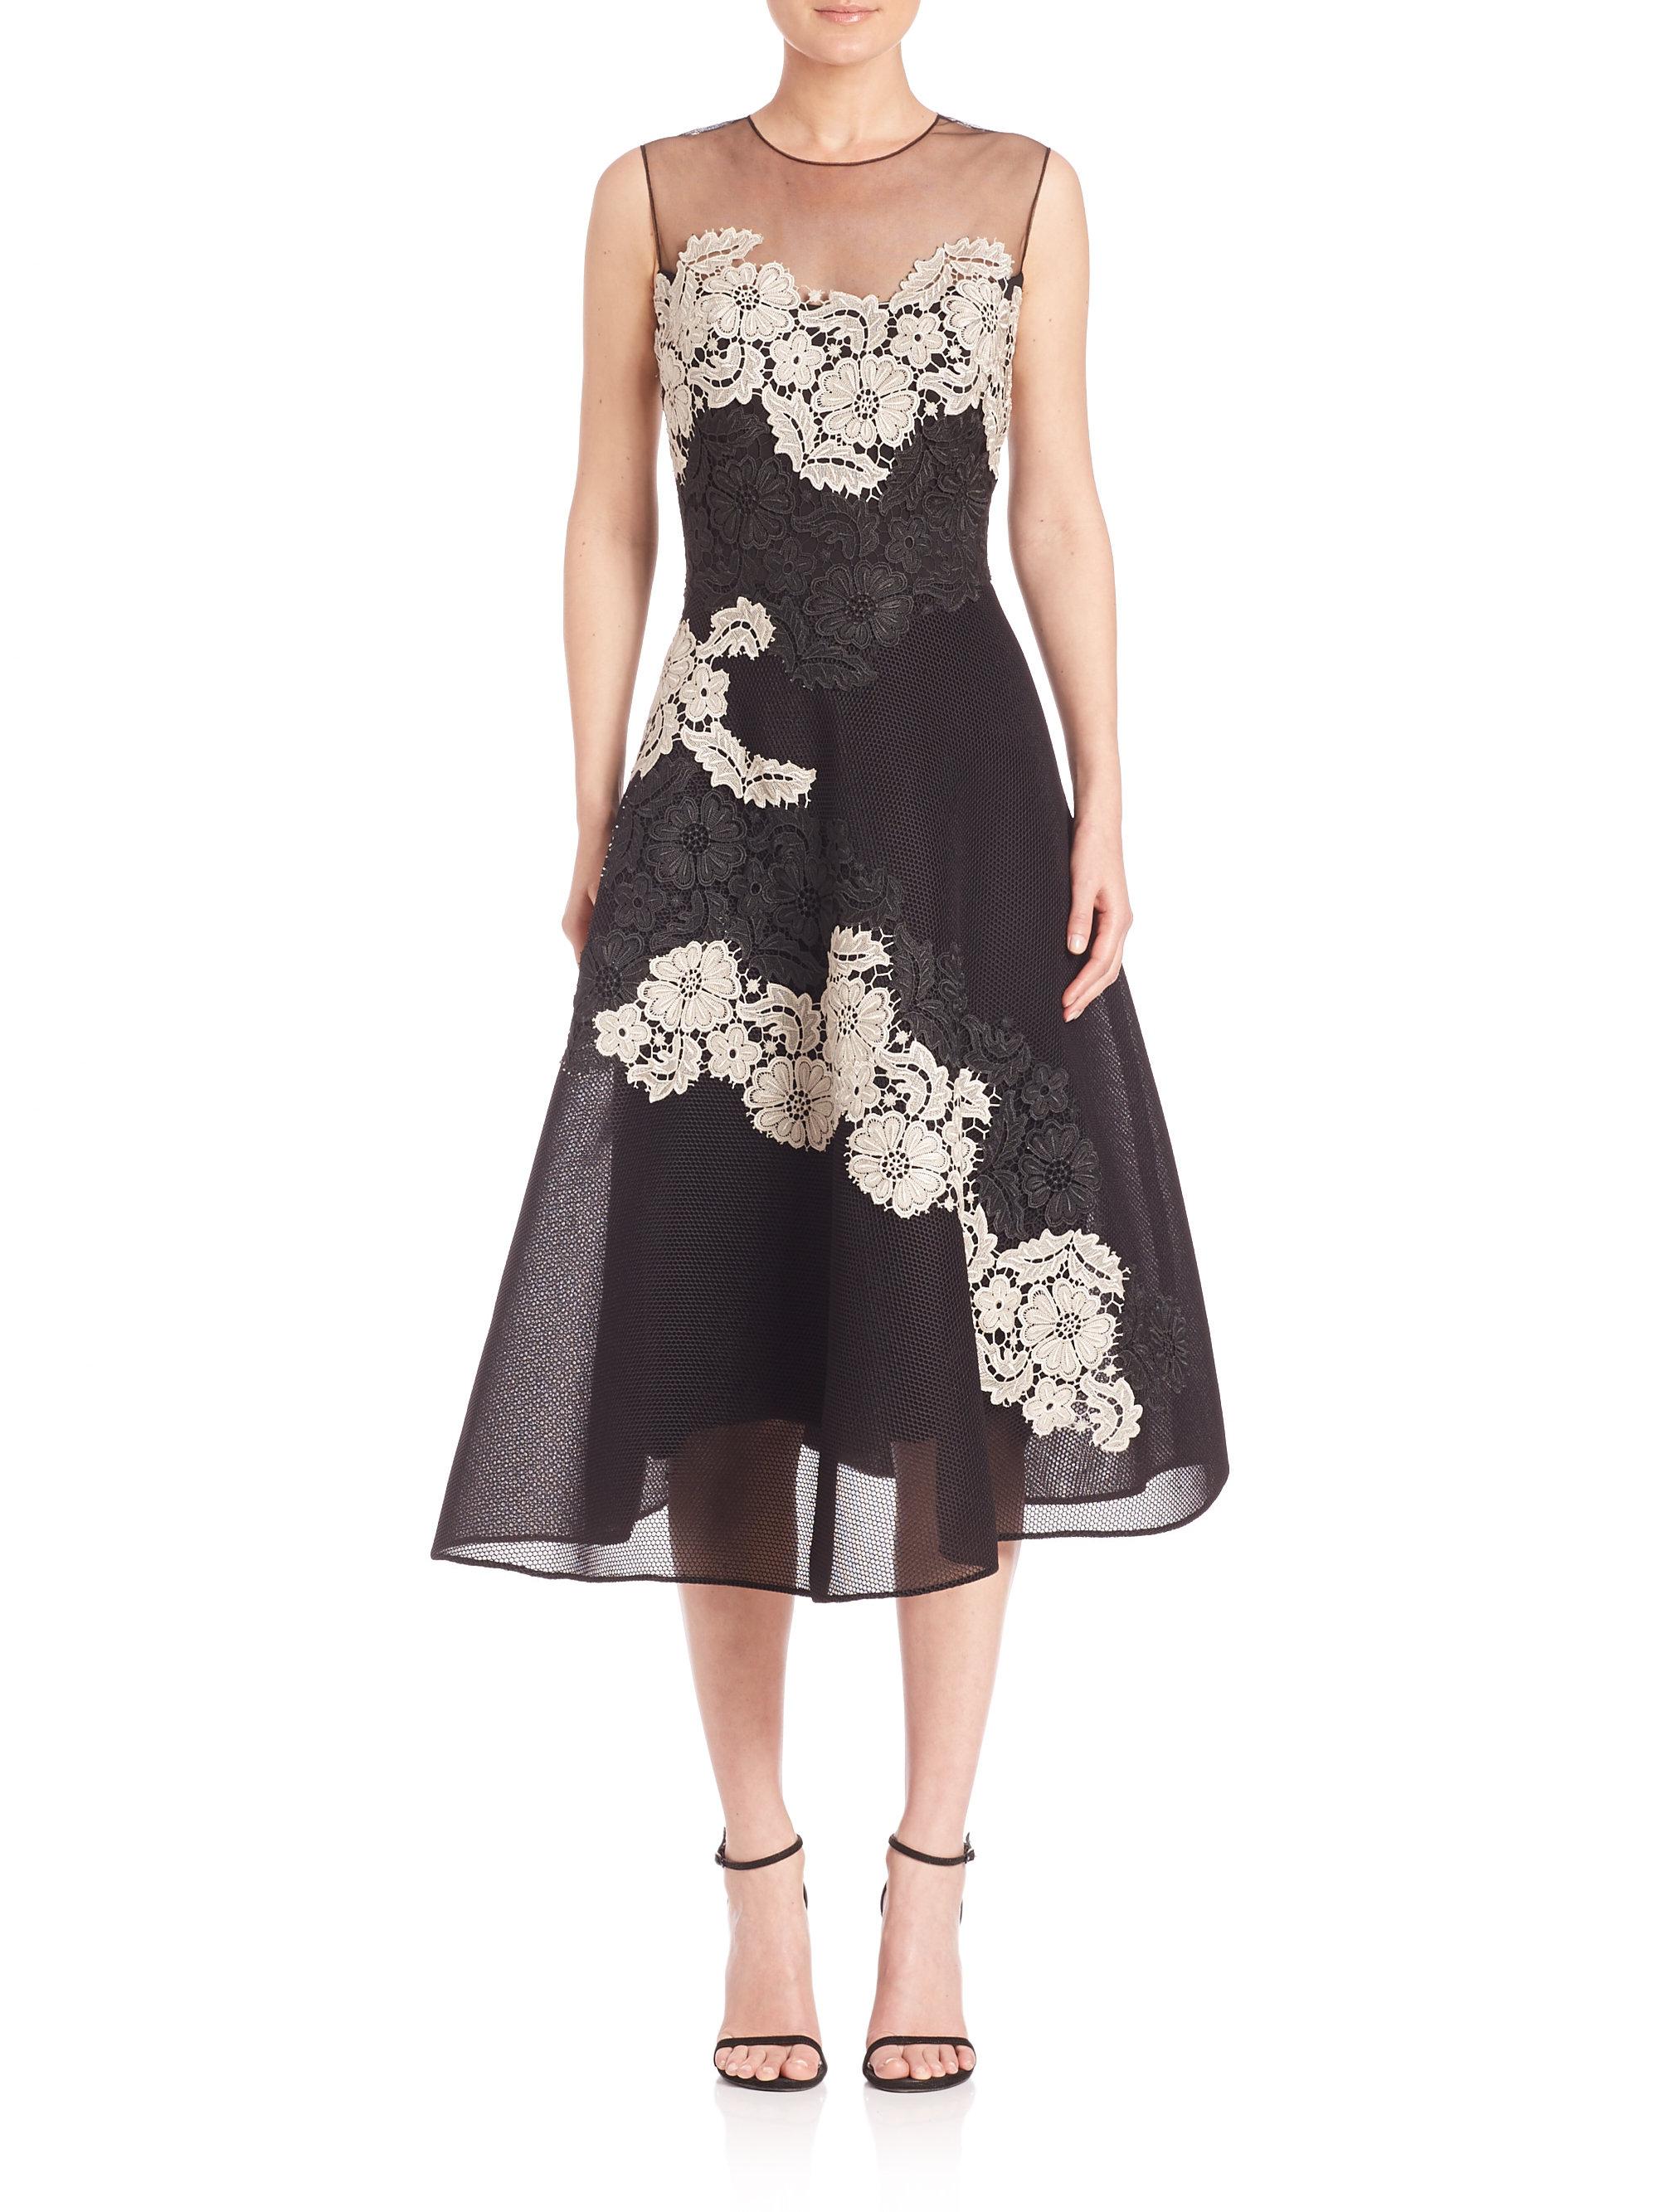 Teri Jon Synthetic Embellished Mesh Sleeveless Dress in Black - Lyst